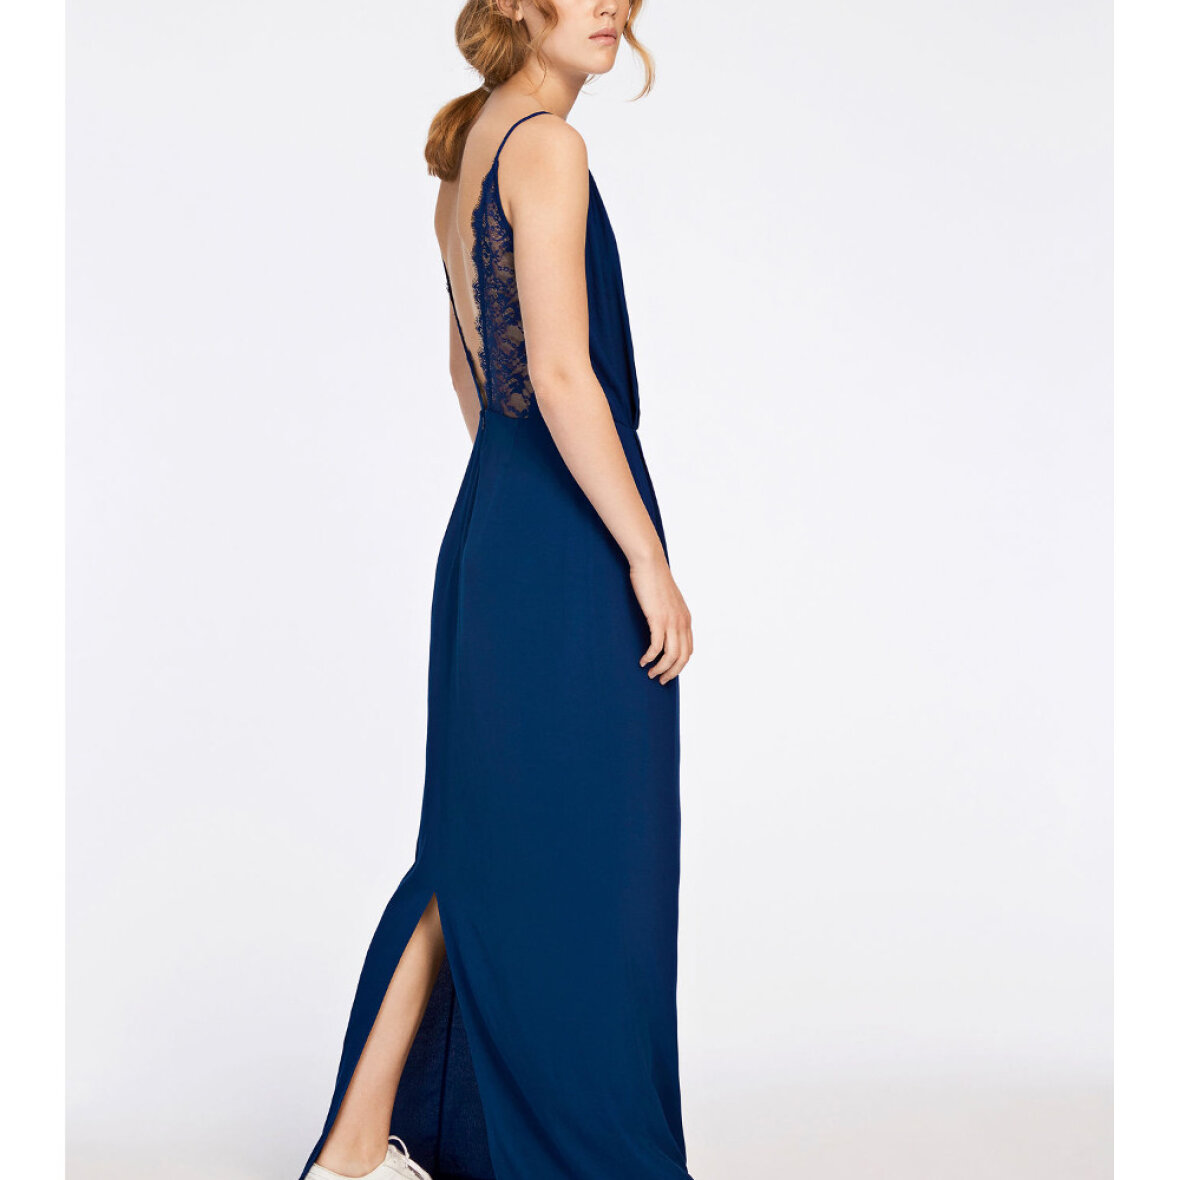 Samsøe & Samsøe Samsøe kjole 6515 l blue - Shop online